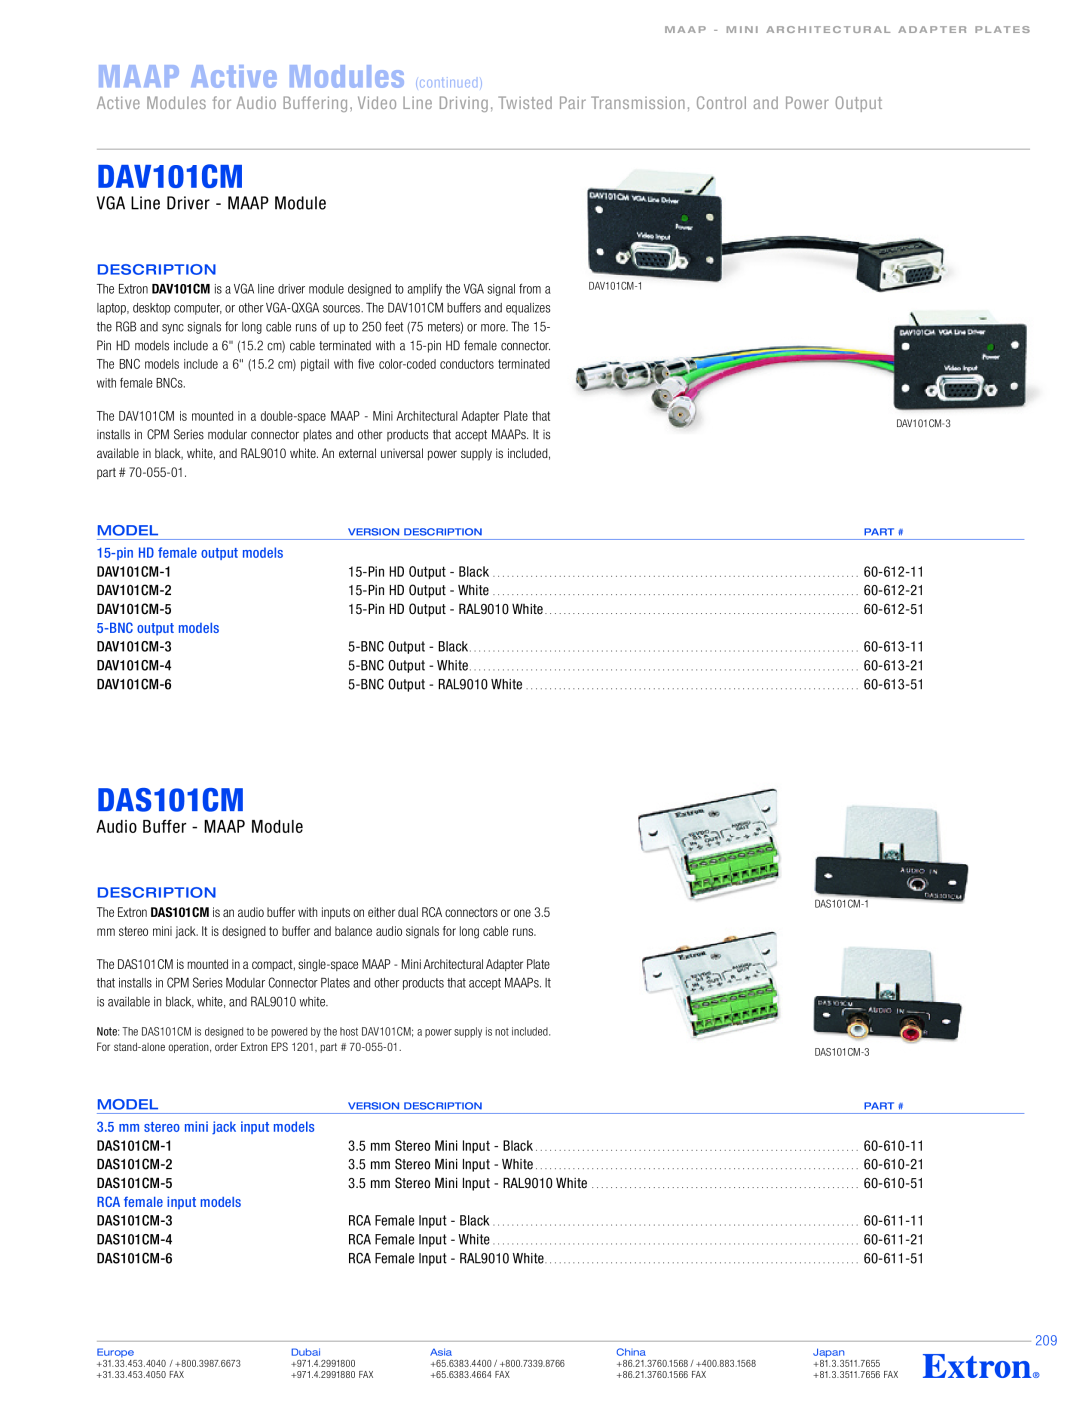 Extron electronic VCM 100 MAAP MAAP Active Modules continued, DAV101CM, DAS101CM, VGA Line Driver - MAAP Module, Model 